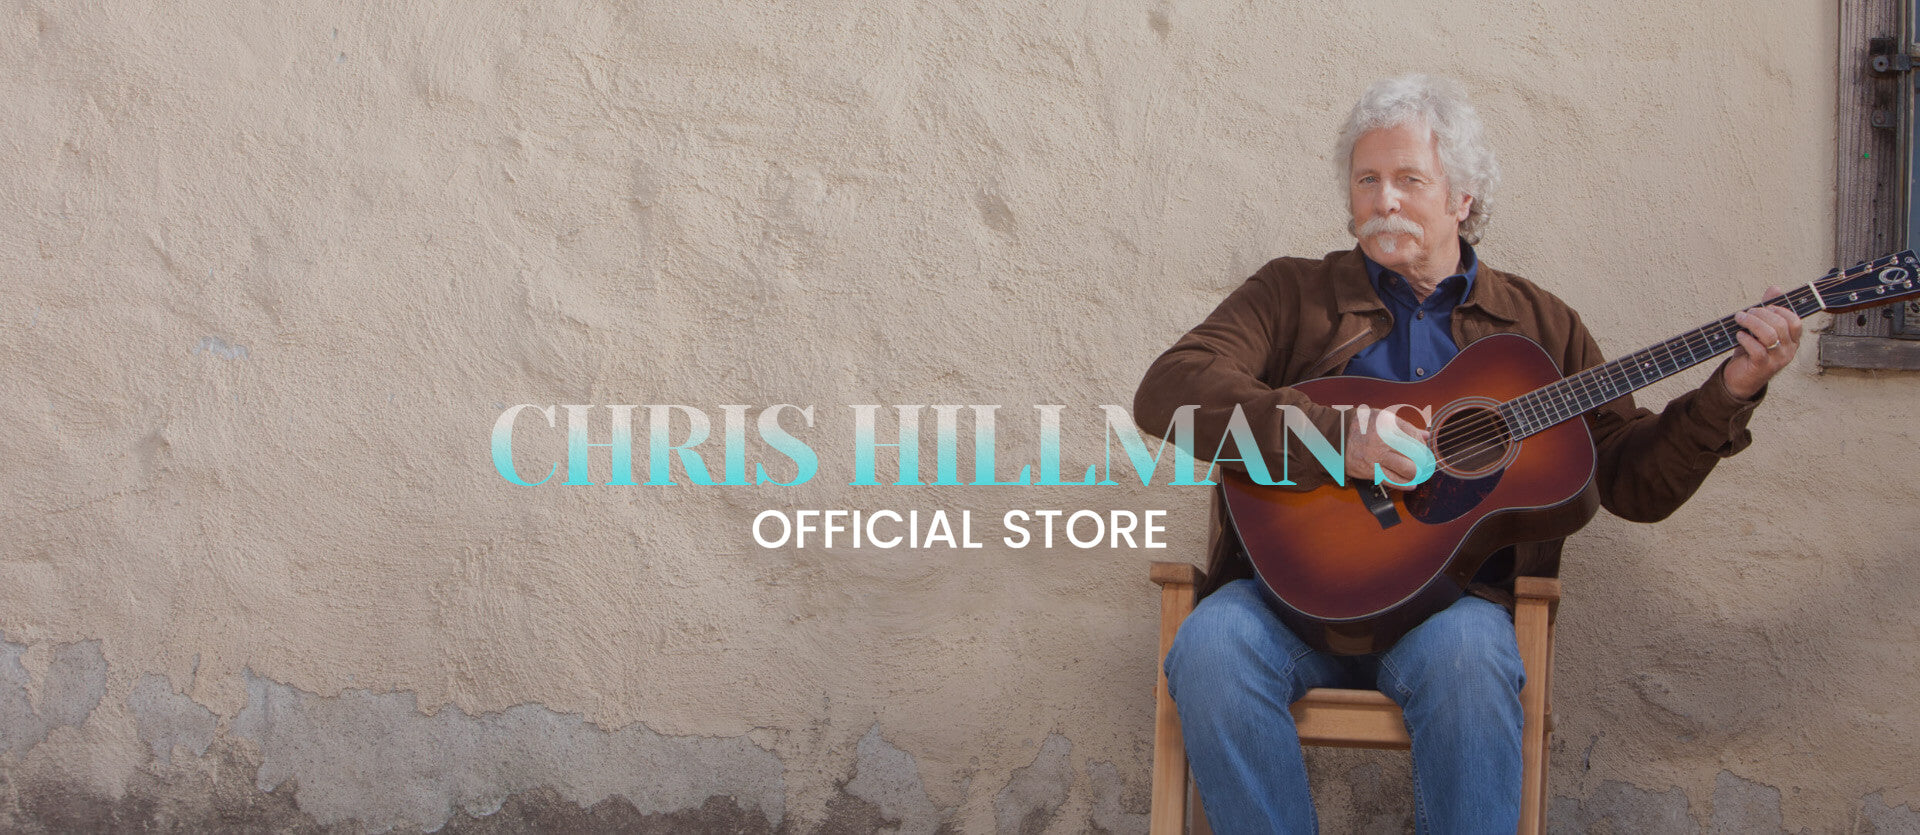 Chris Hillman's Official Store